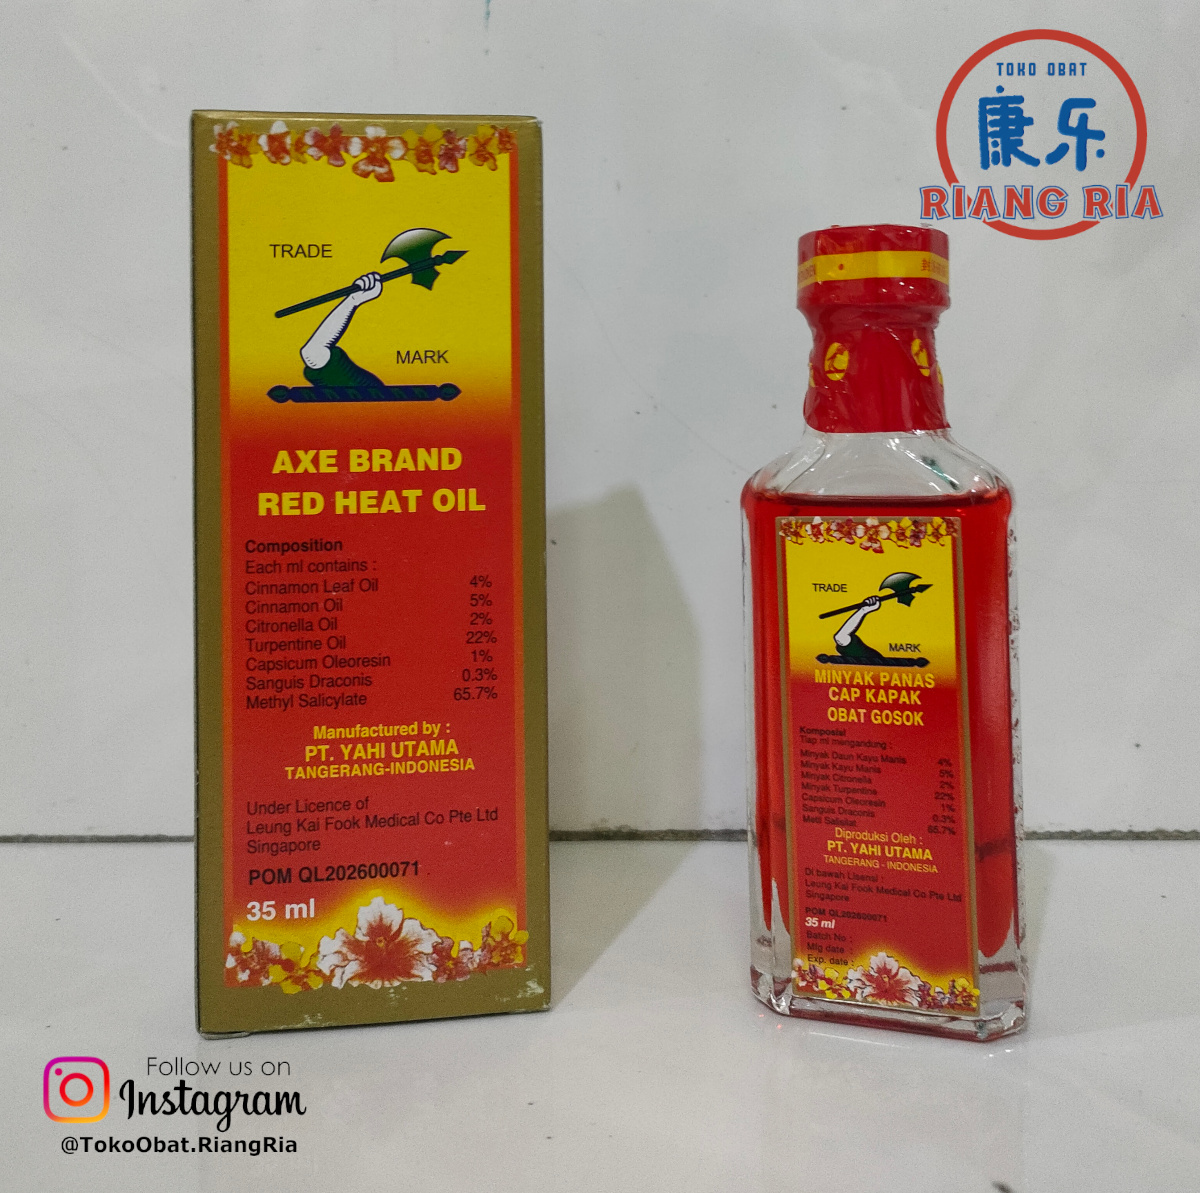 Minyak Panas Cap Kapak Obat Gosok 35ML Axe Brand Red Heat Oil Minyak